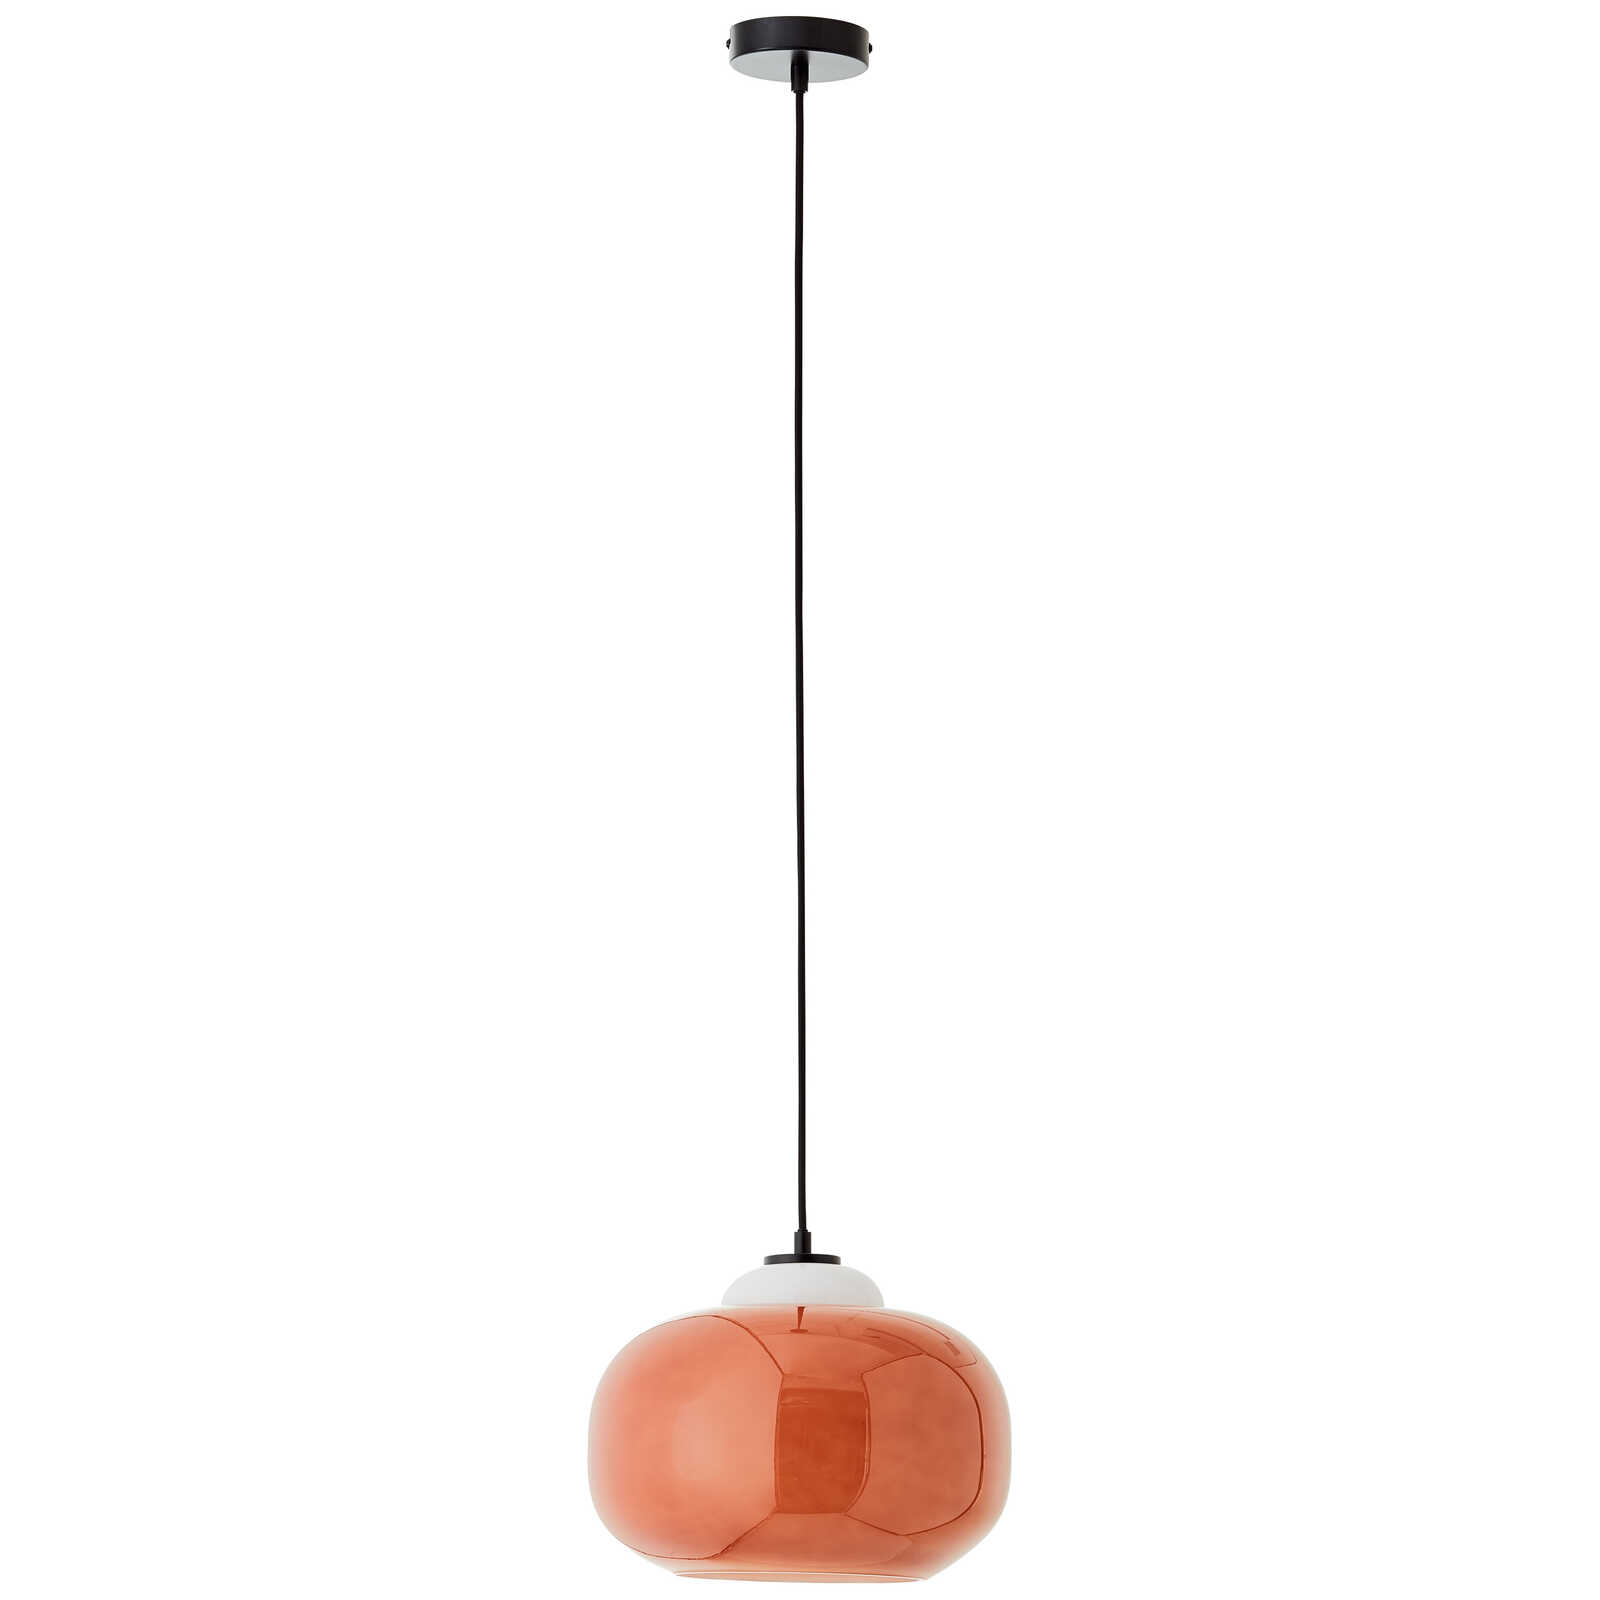             Glazen hanglamp - Carla 2 - Oranje
        